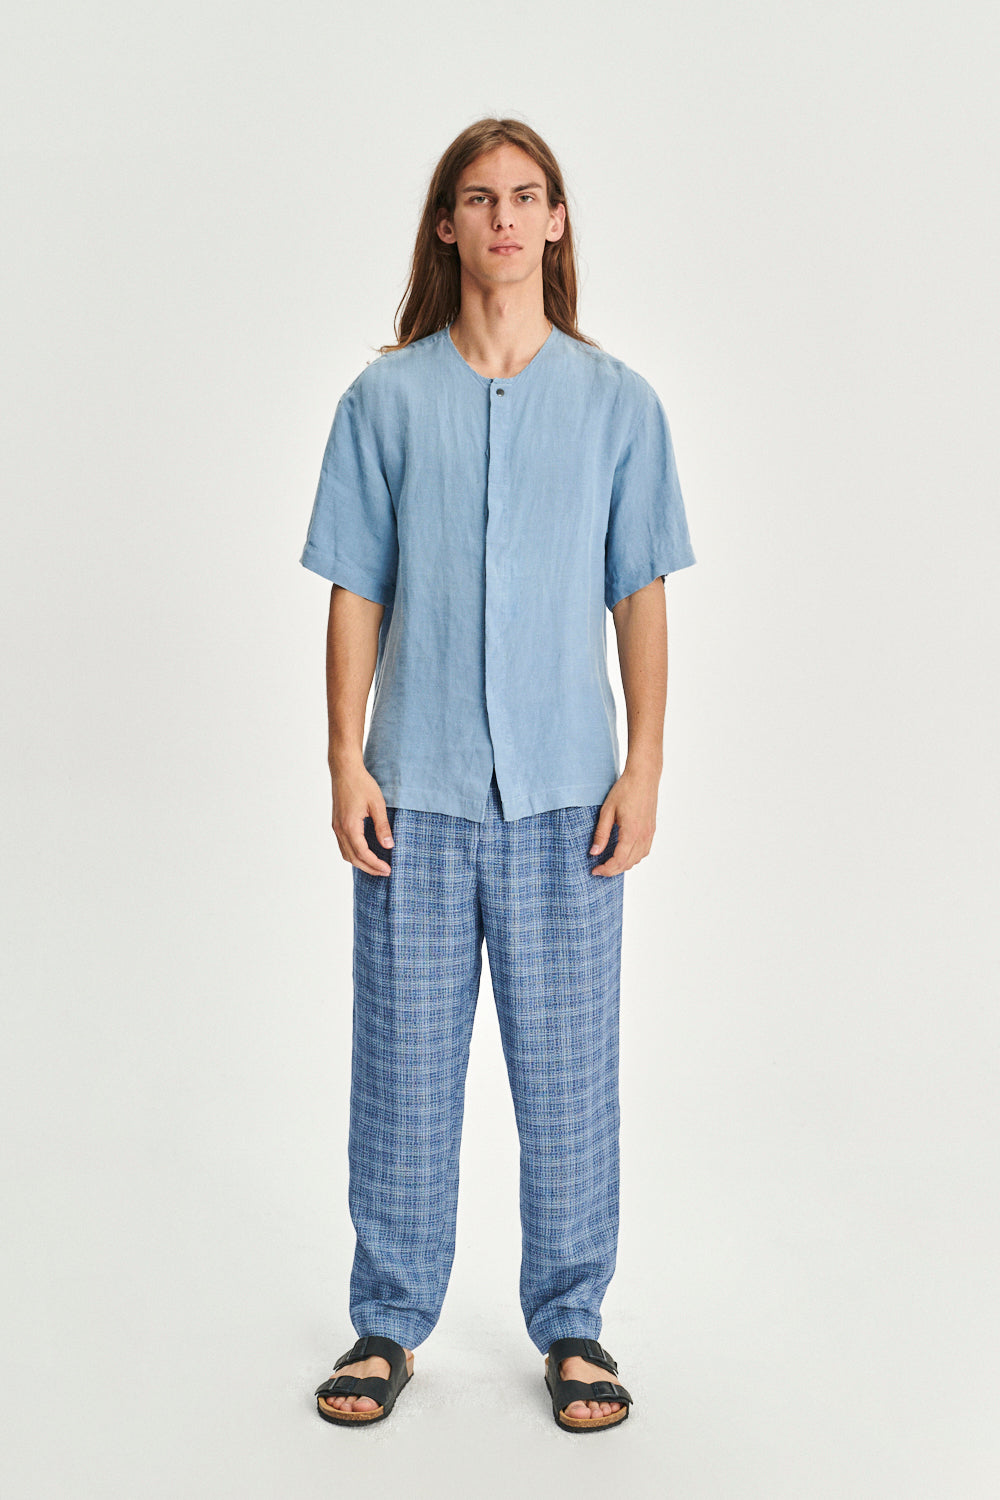 Short Sleeve Minimal Shirt in a Fine Indigo Blue Portuguese Linen